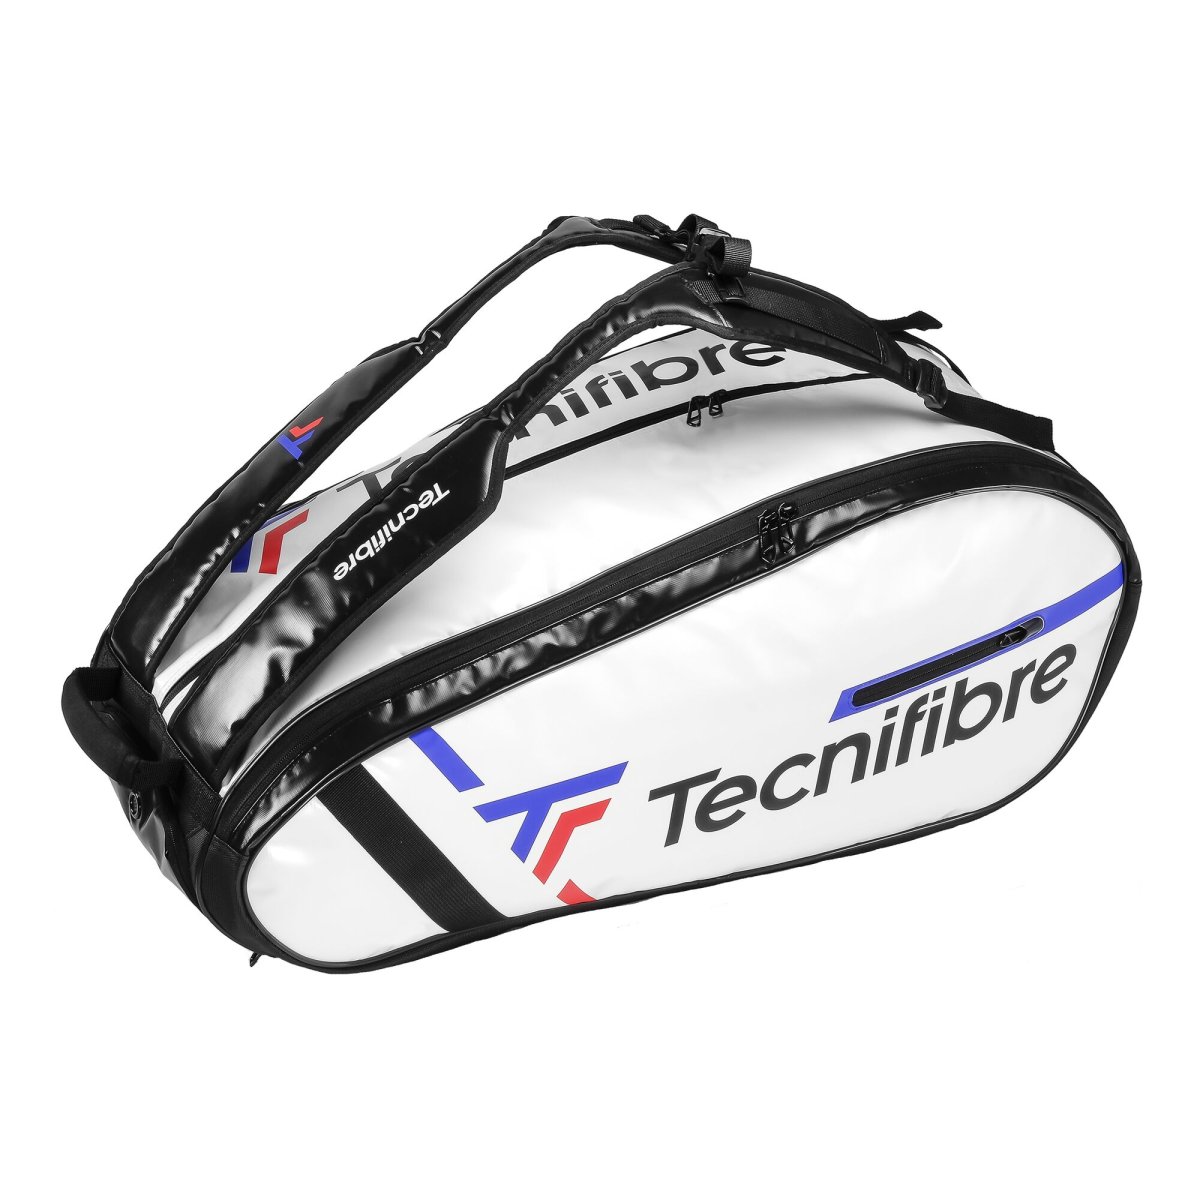 Tecnifibre Tour Endurance RS Rackpack Large Tennis Bag White